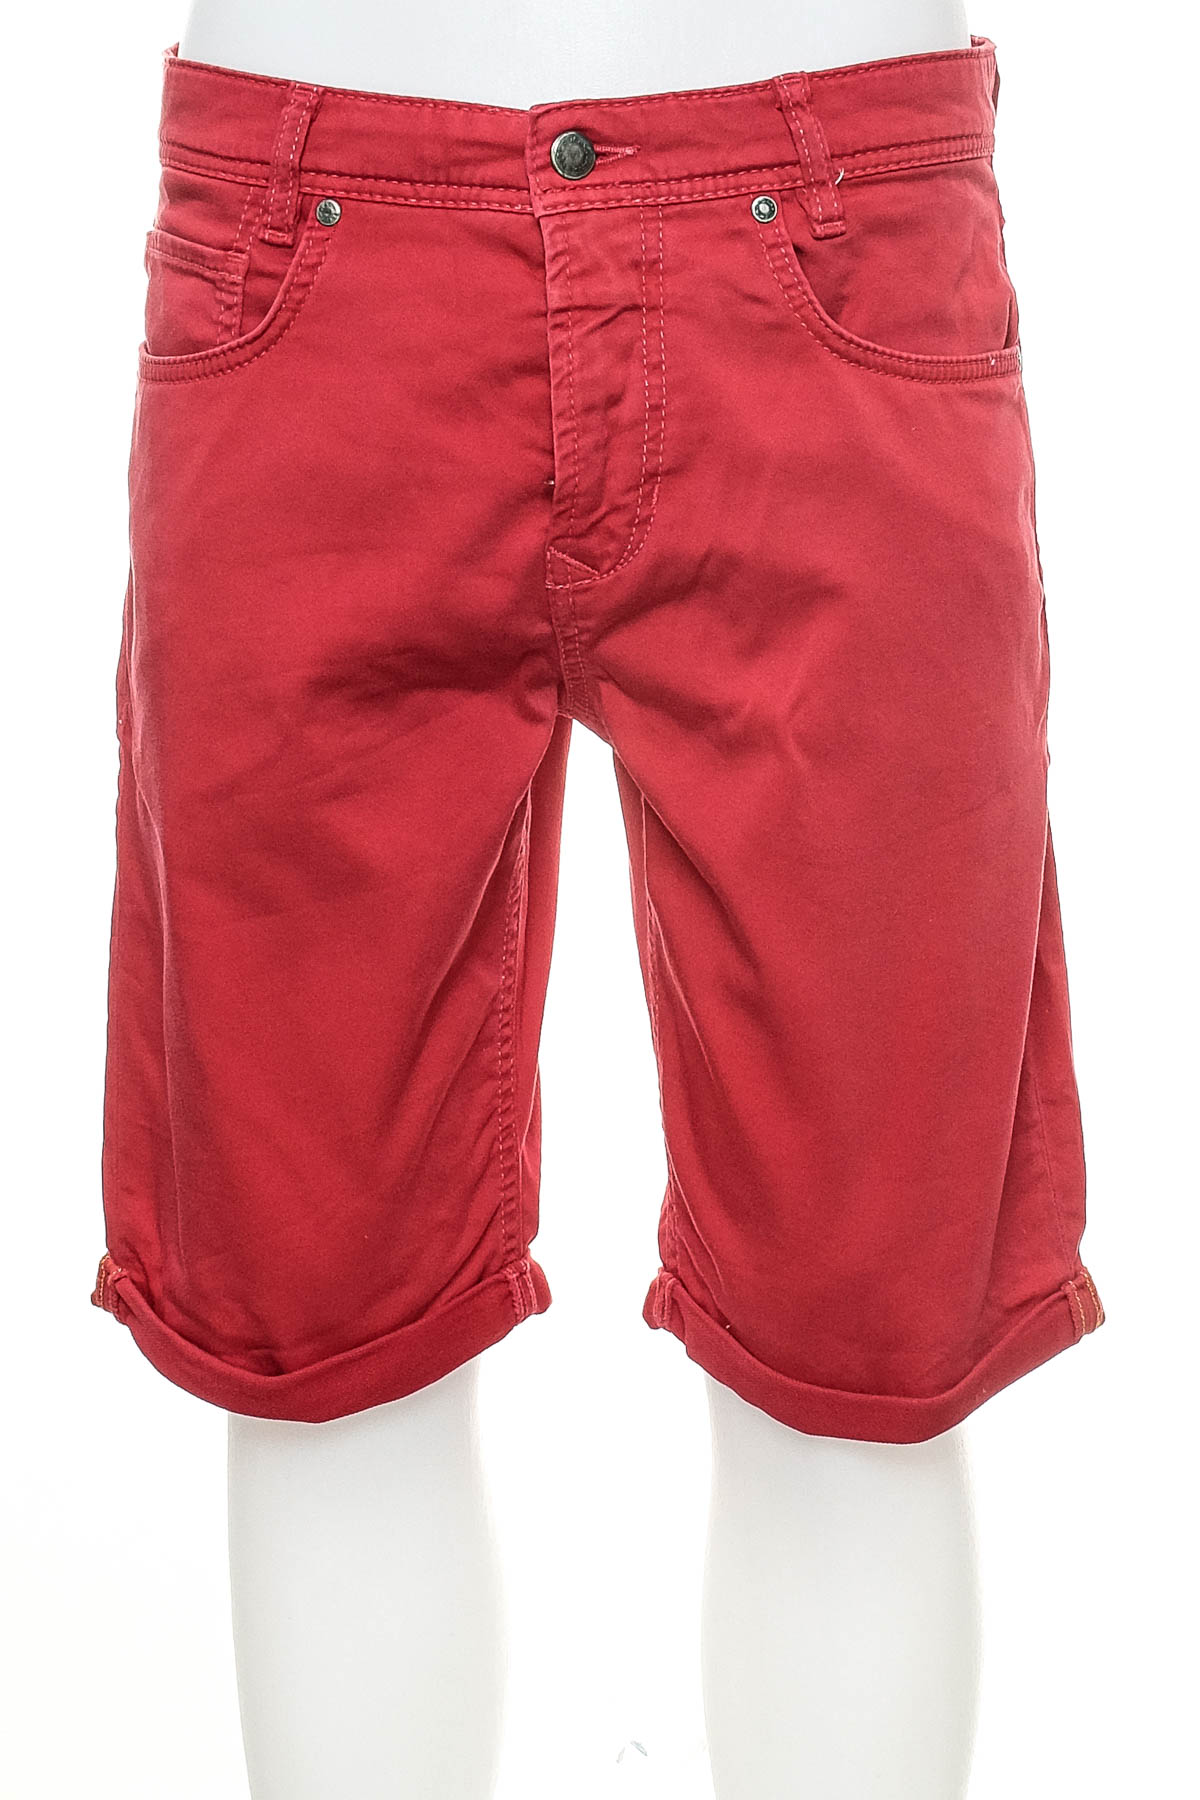 Men's shorts - MAC - 0